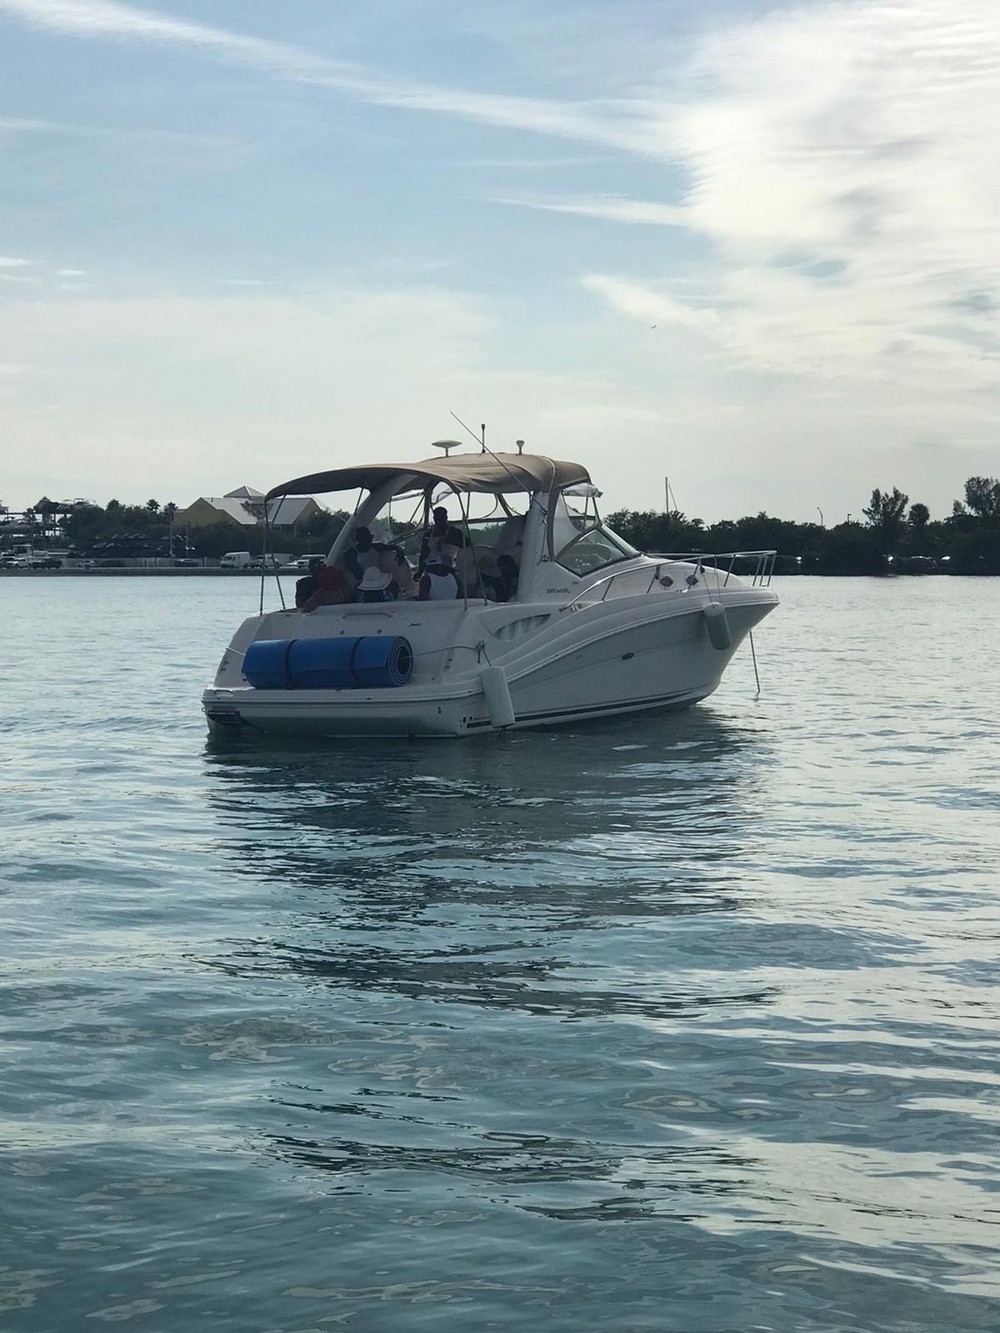 Coast Guard, partner agencies stop two illegal charters near Miami Marine Stadium